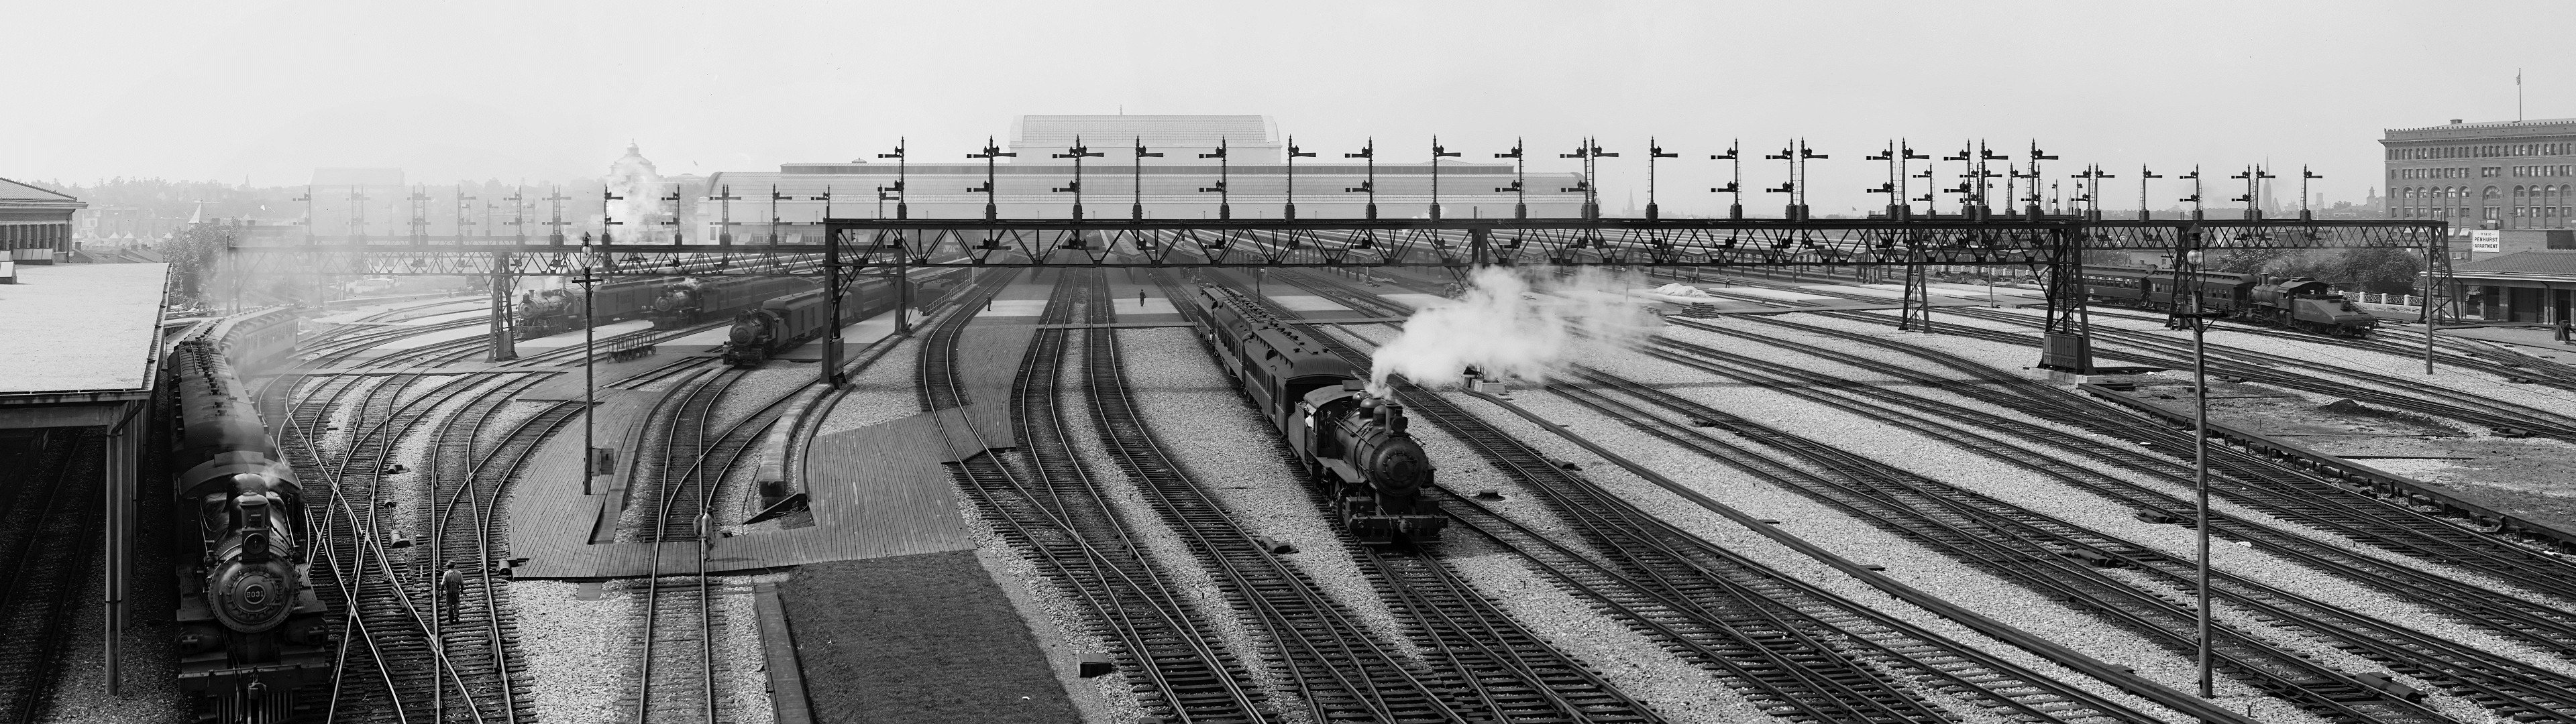 train, Steam locomotive, Rail yard, Railway, Multiple display Wallpaper